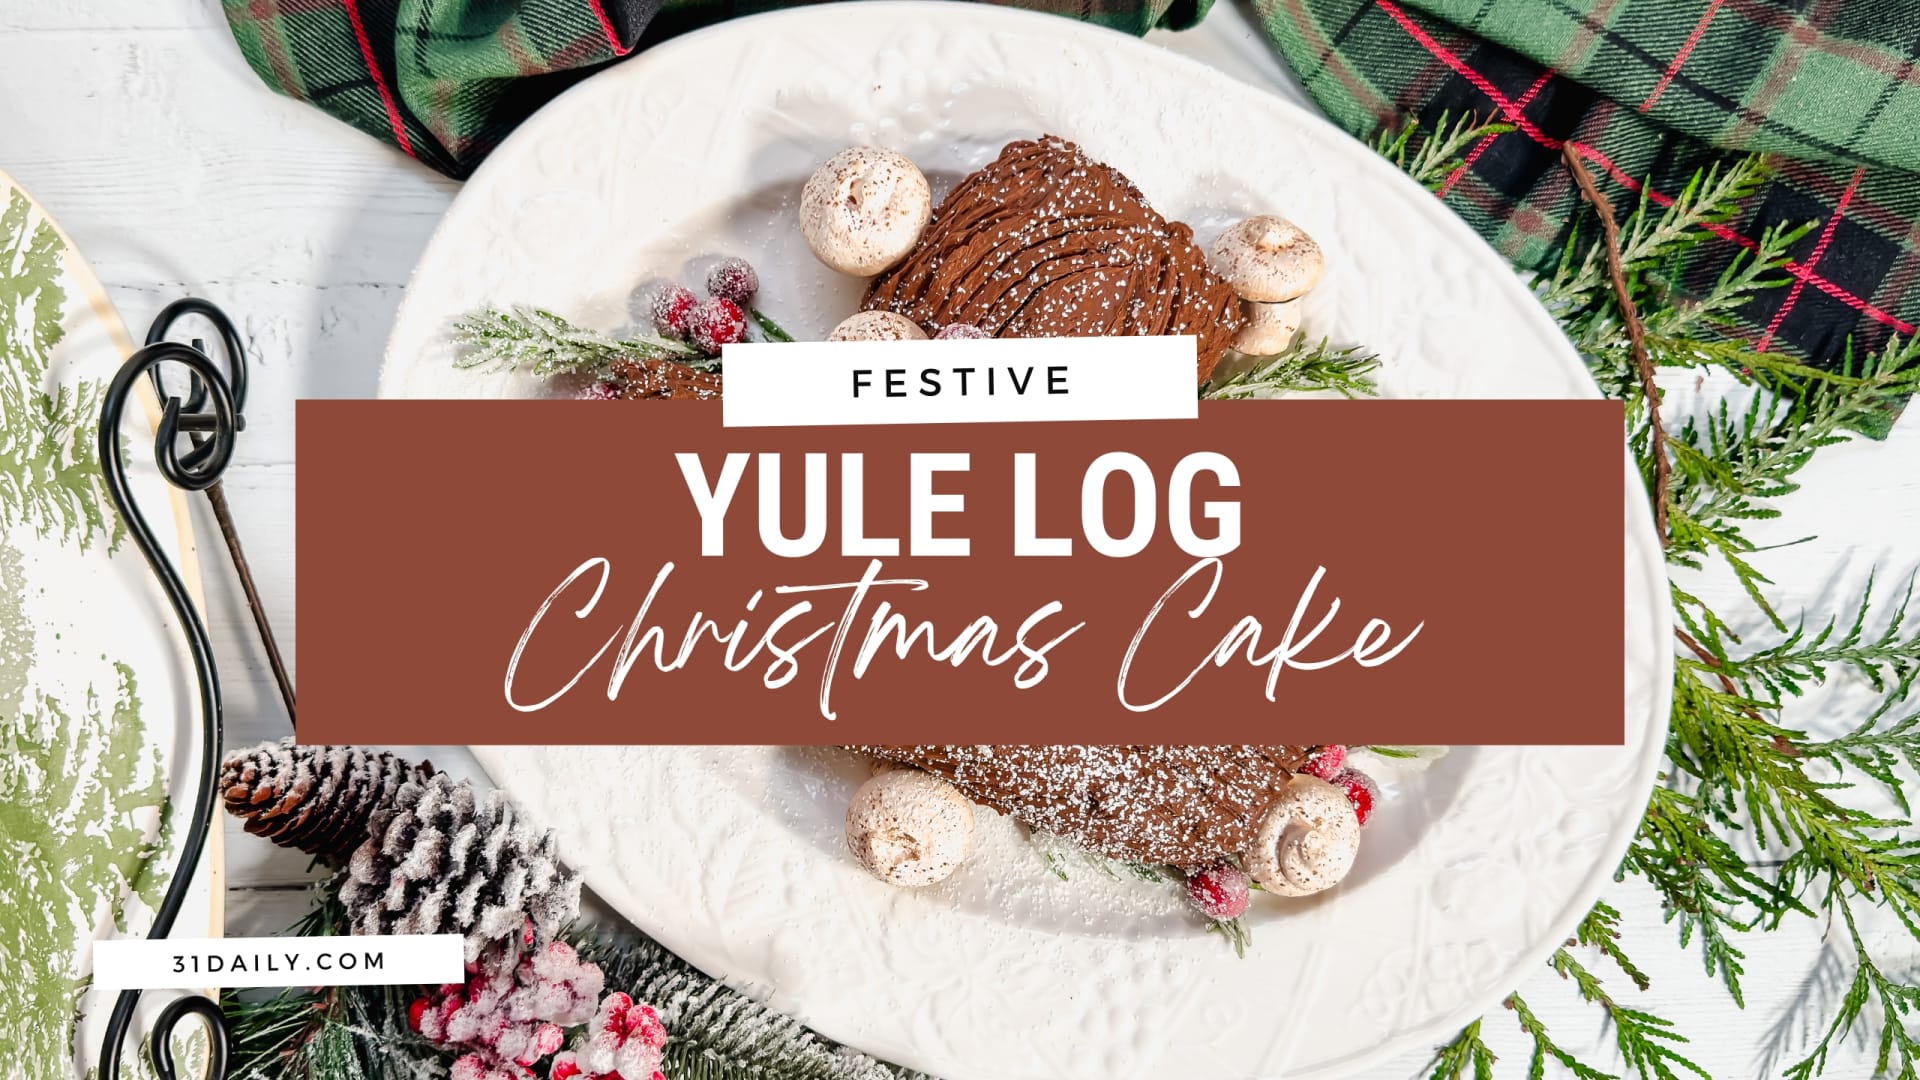 Festive Christmas Yule Log - MyLoveOfBaking